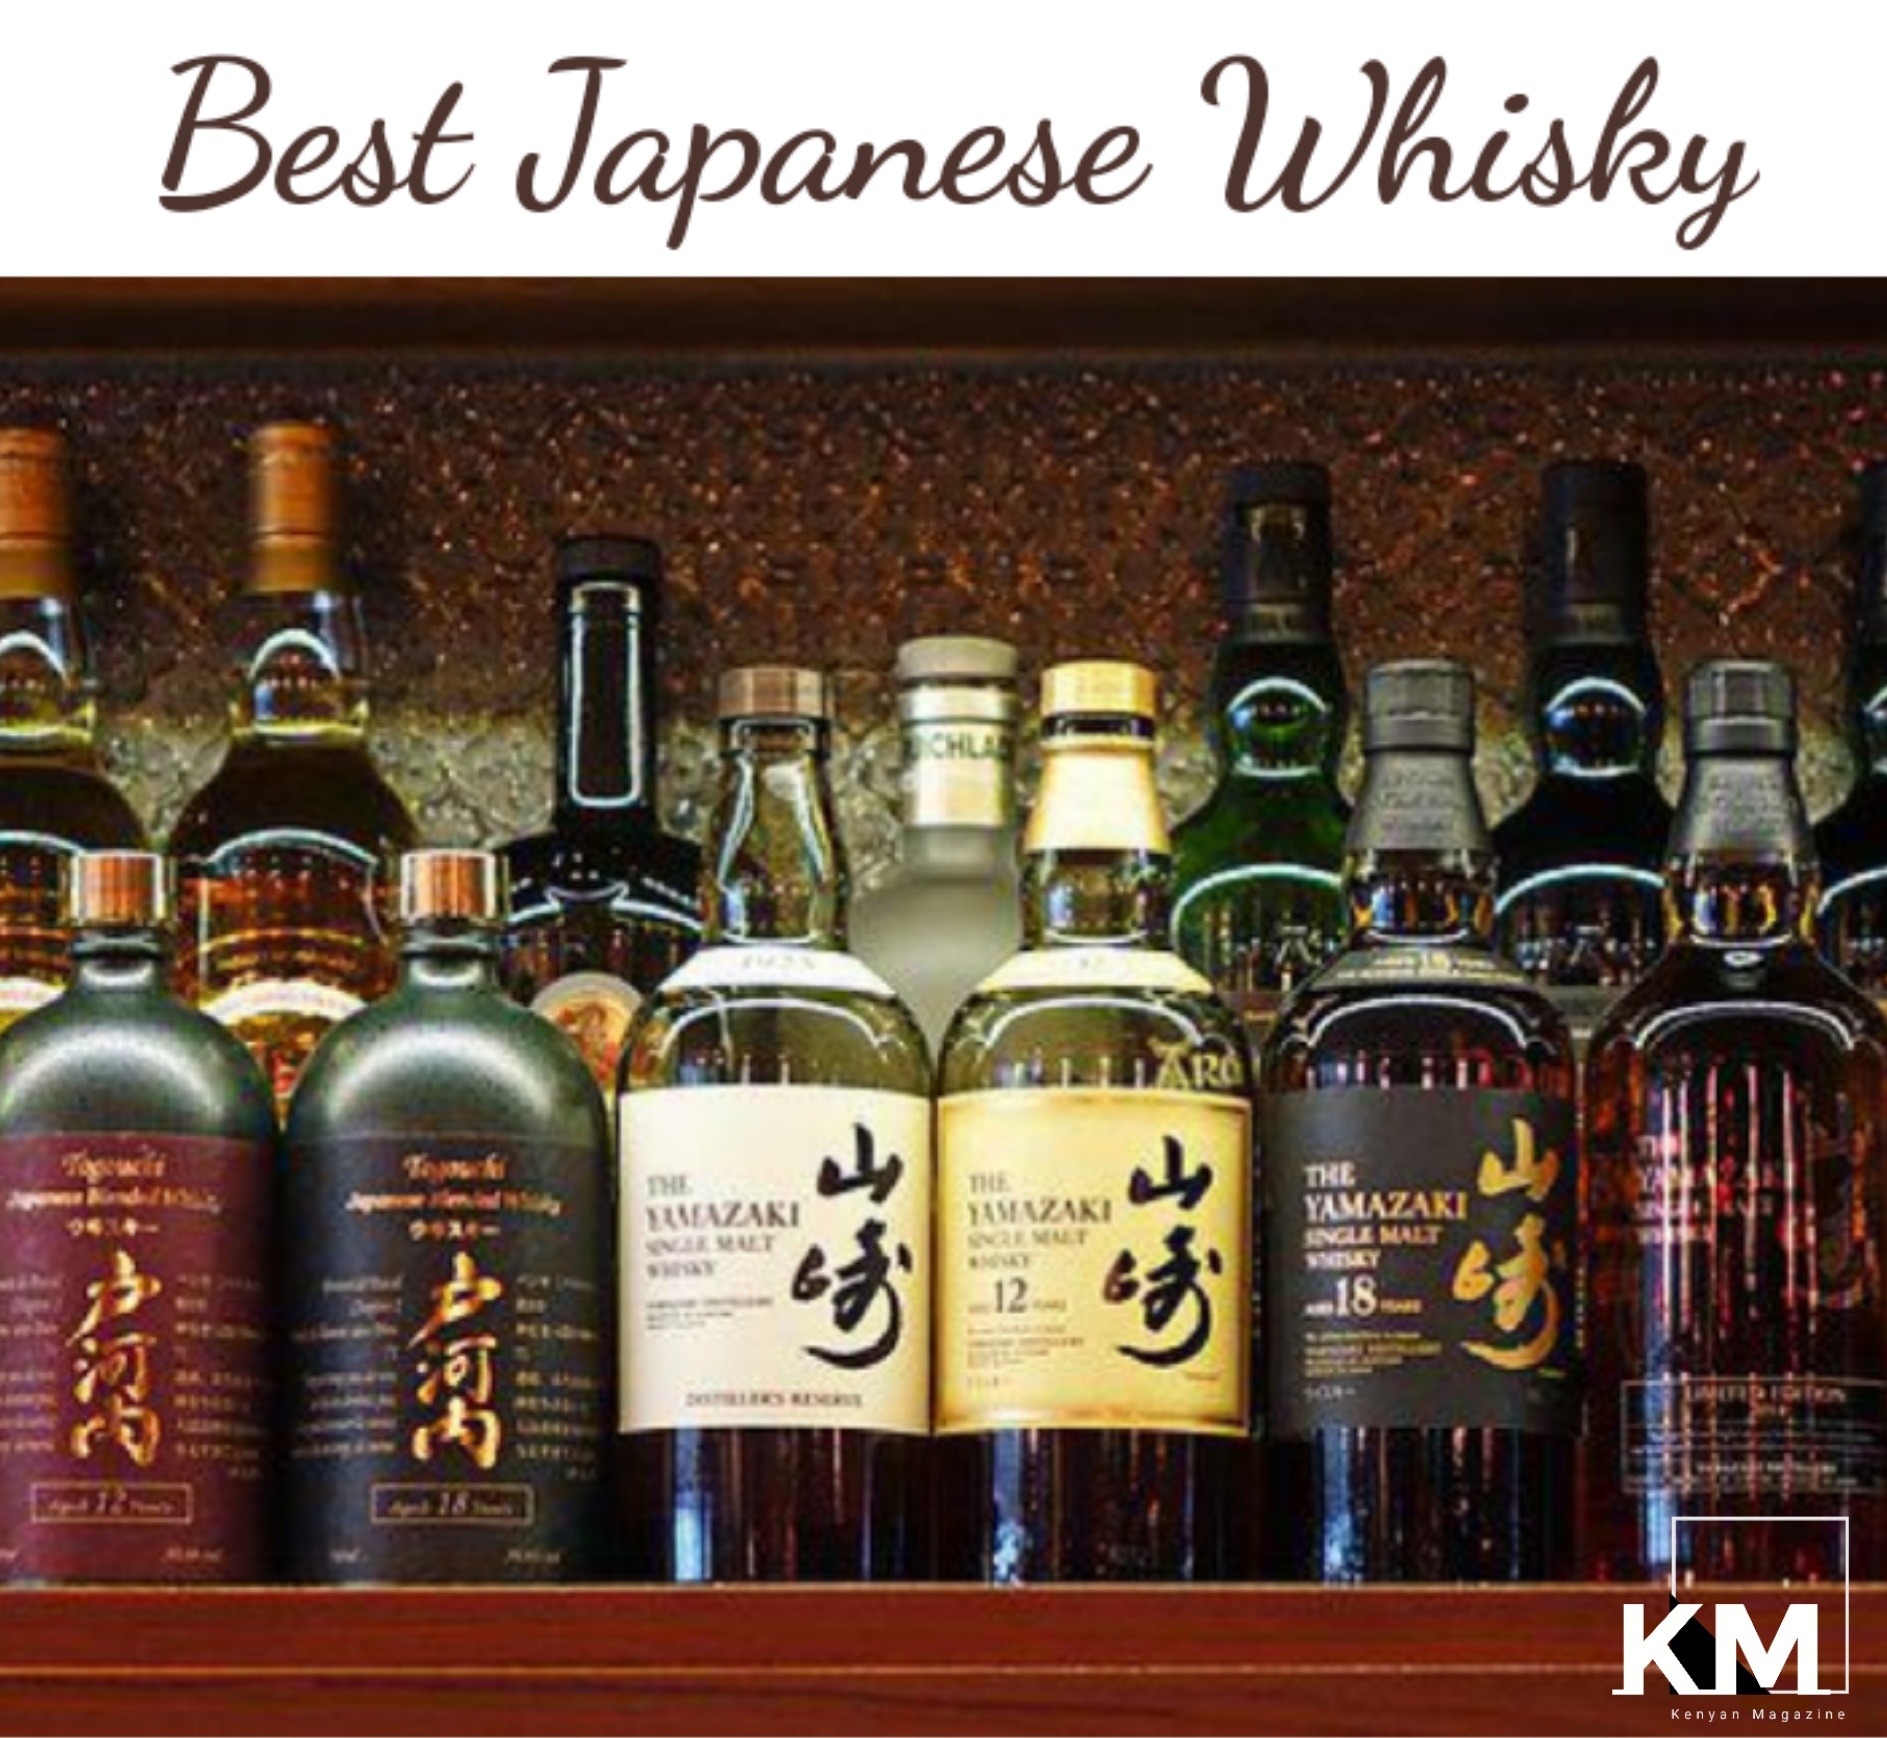 Best Japanese Whiskies